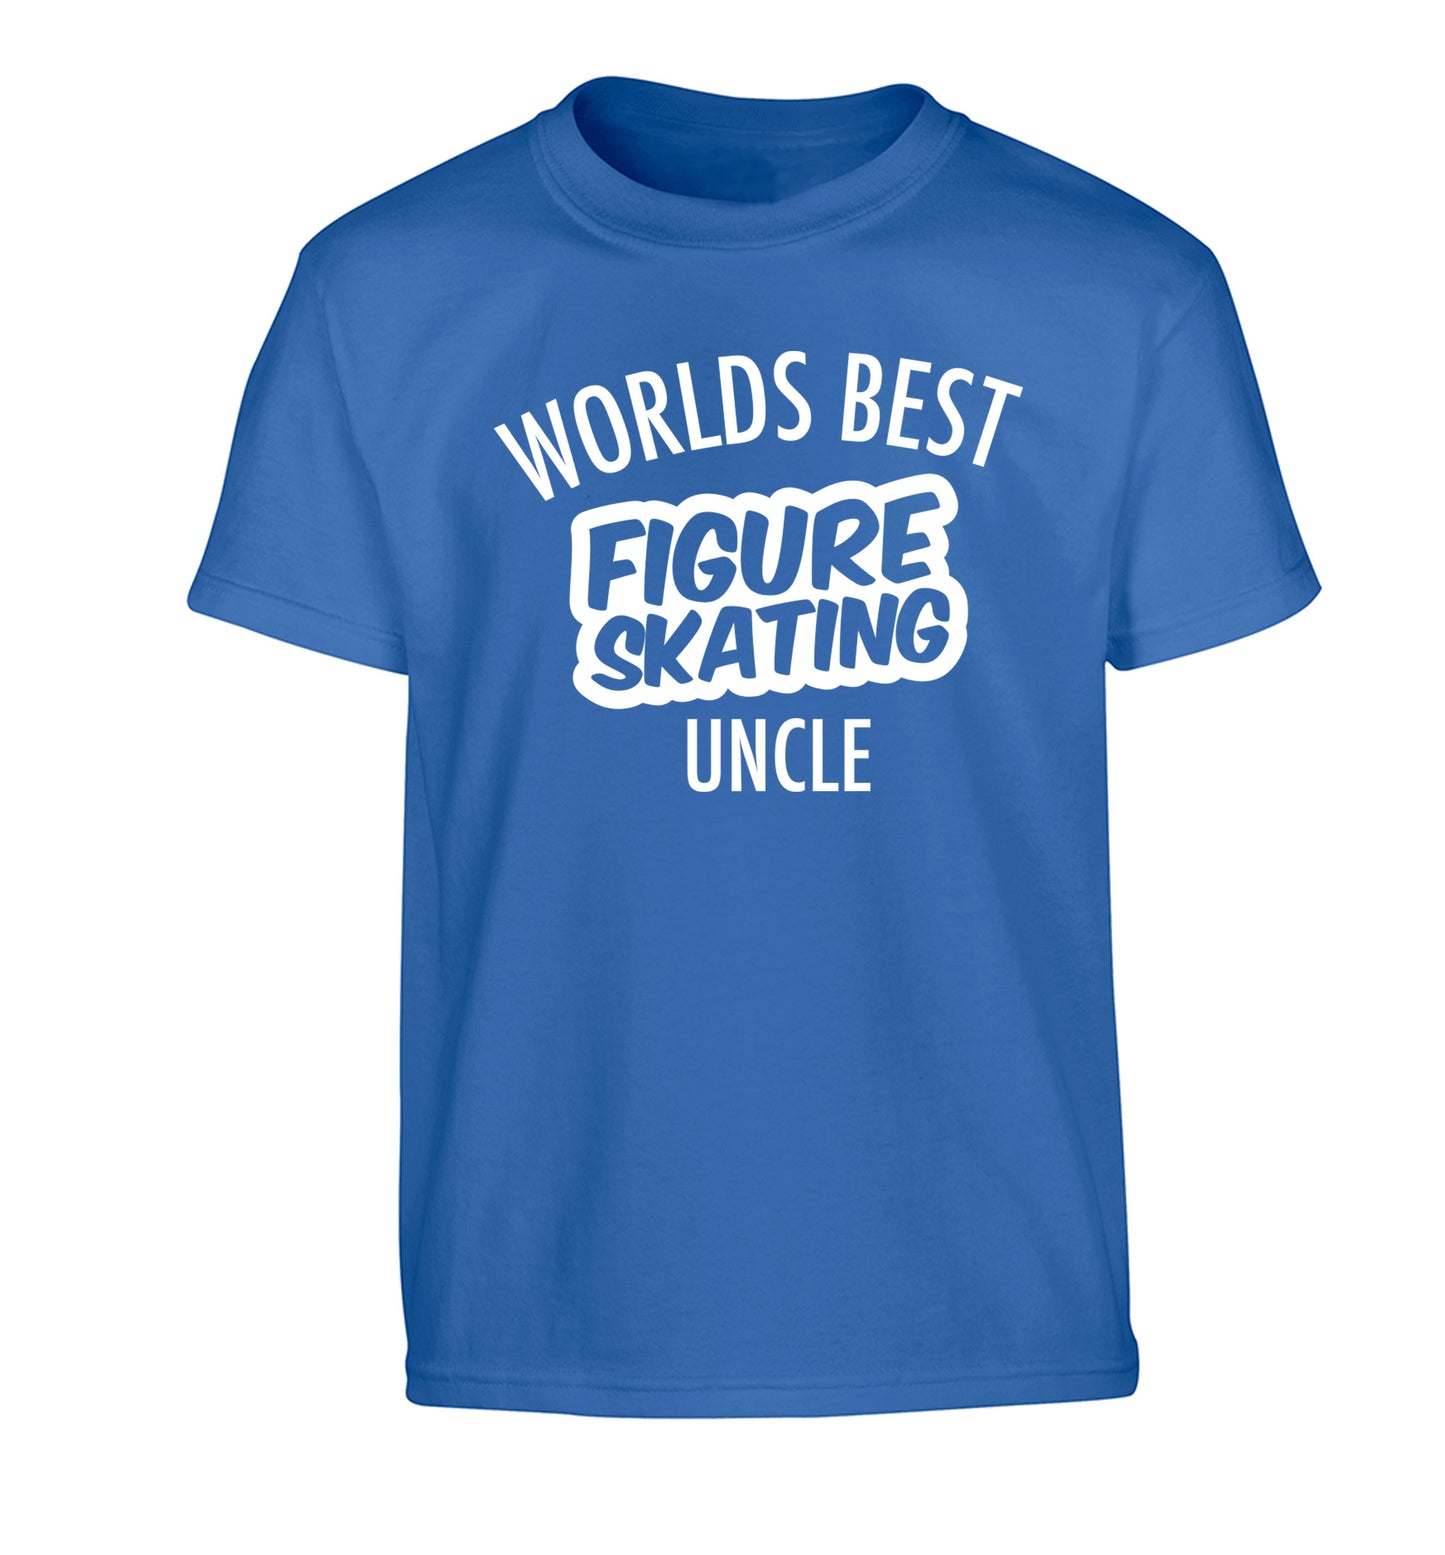 Worlds best figure skating uncle Children's blue Tshirt 12-14 Years